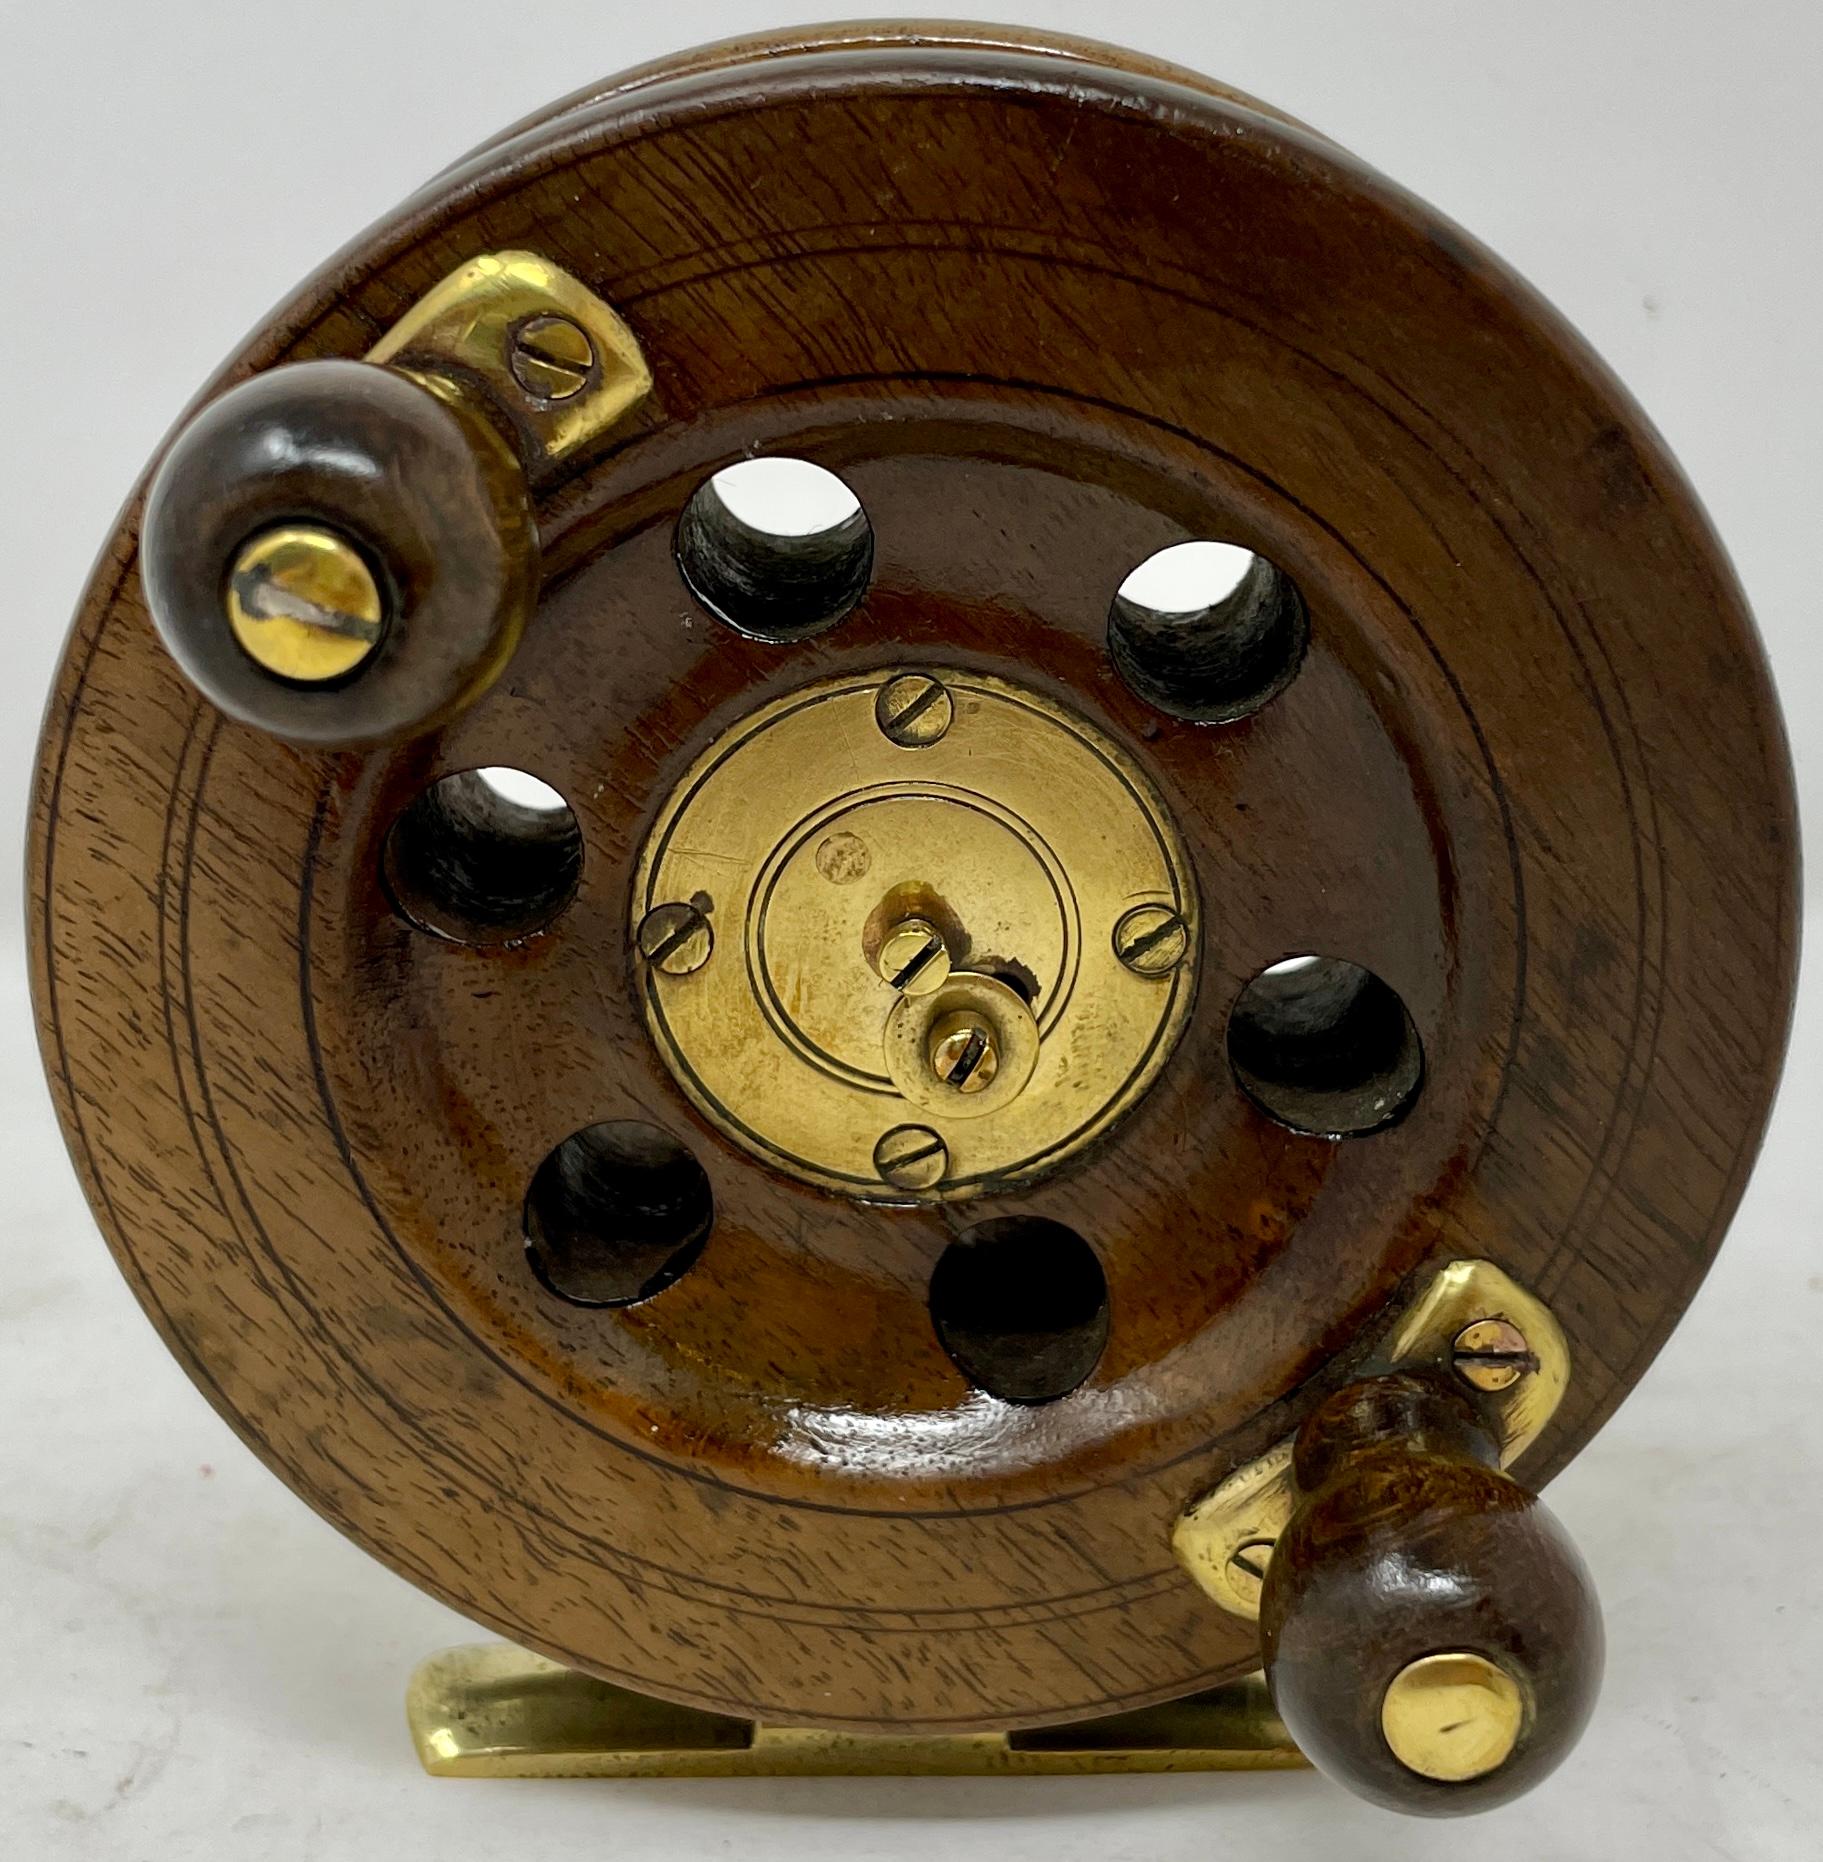 Antique English walnut fly fishing wheel with brass mounts, circa 1890-1900.